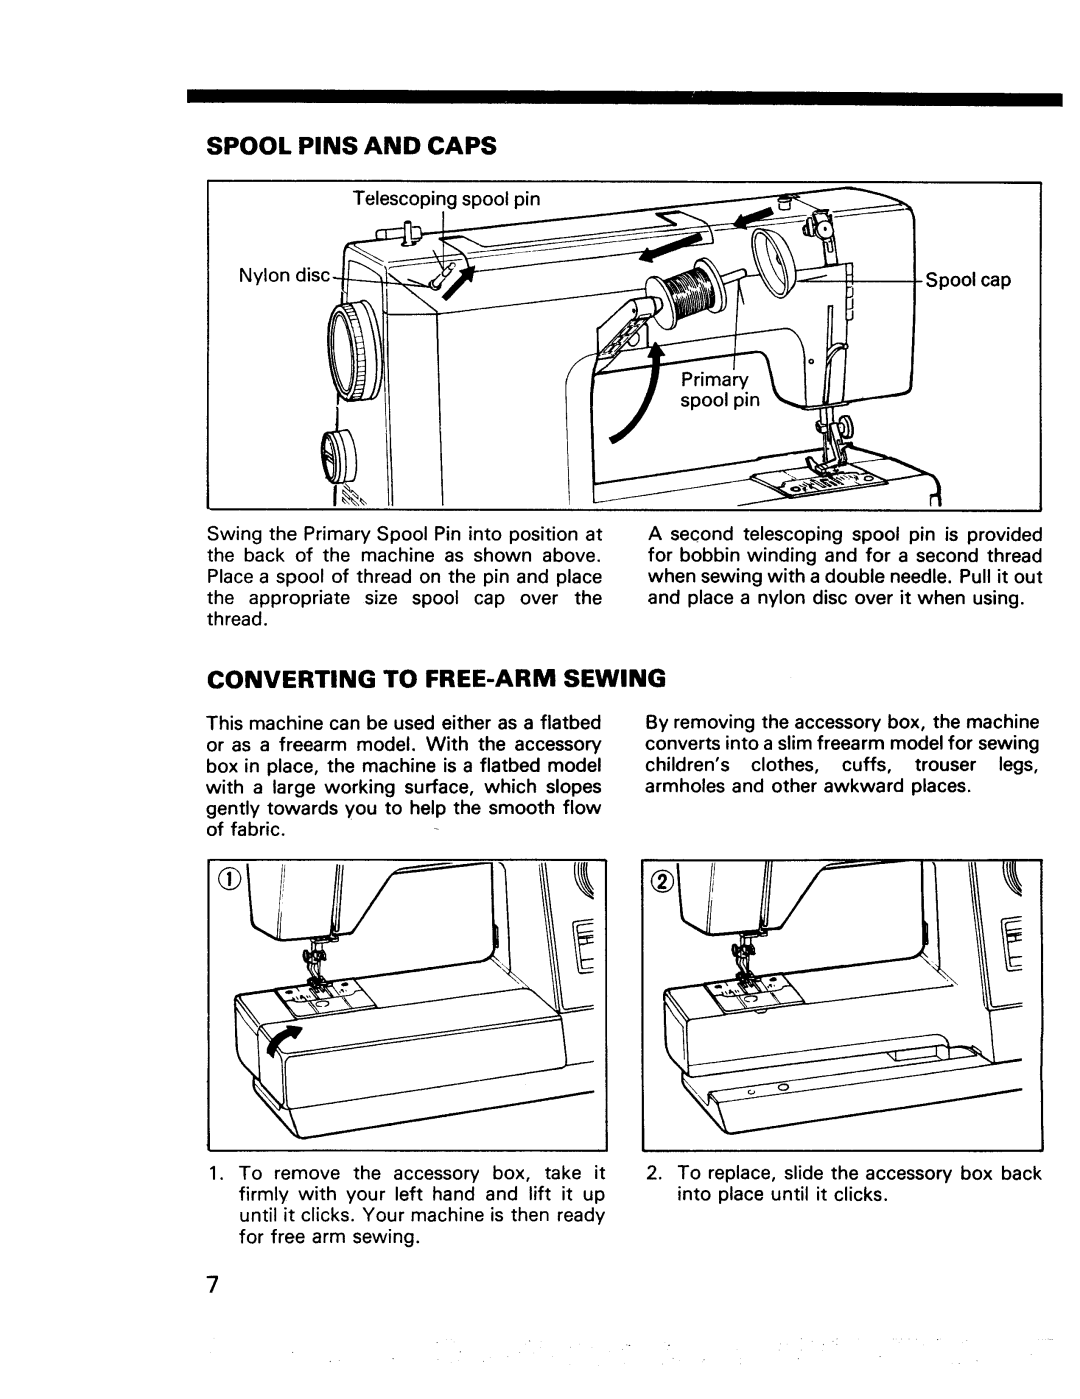 Kenmore 17920, 17922 manual Spool Pins And Caps, Converting, Sewing, Free-Arm 